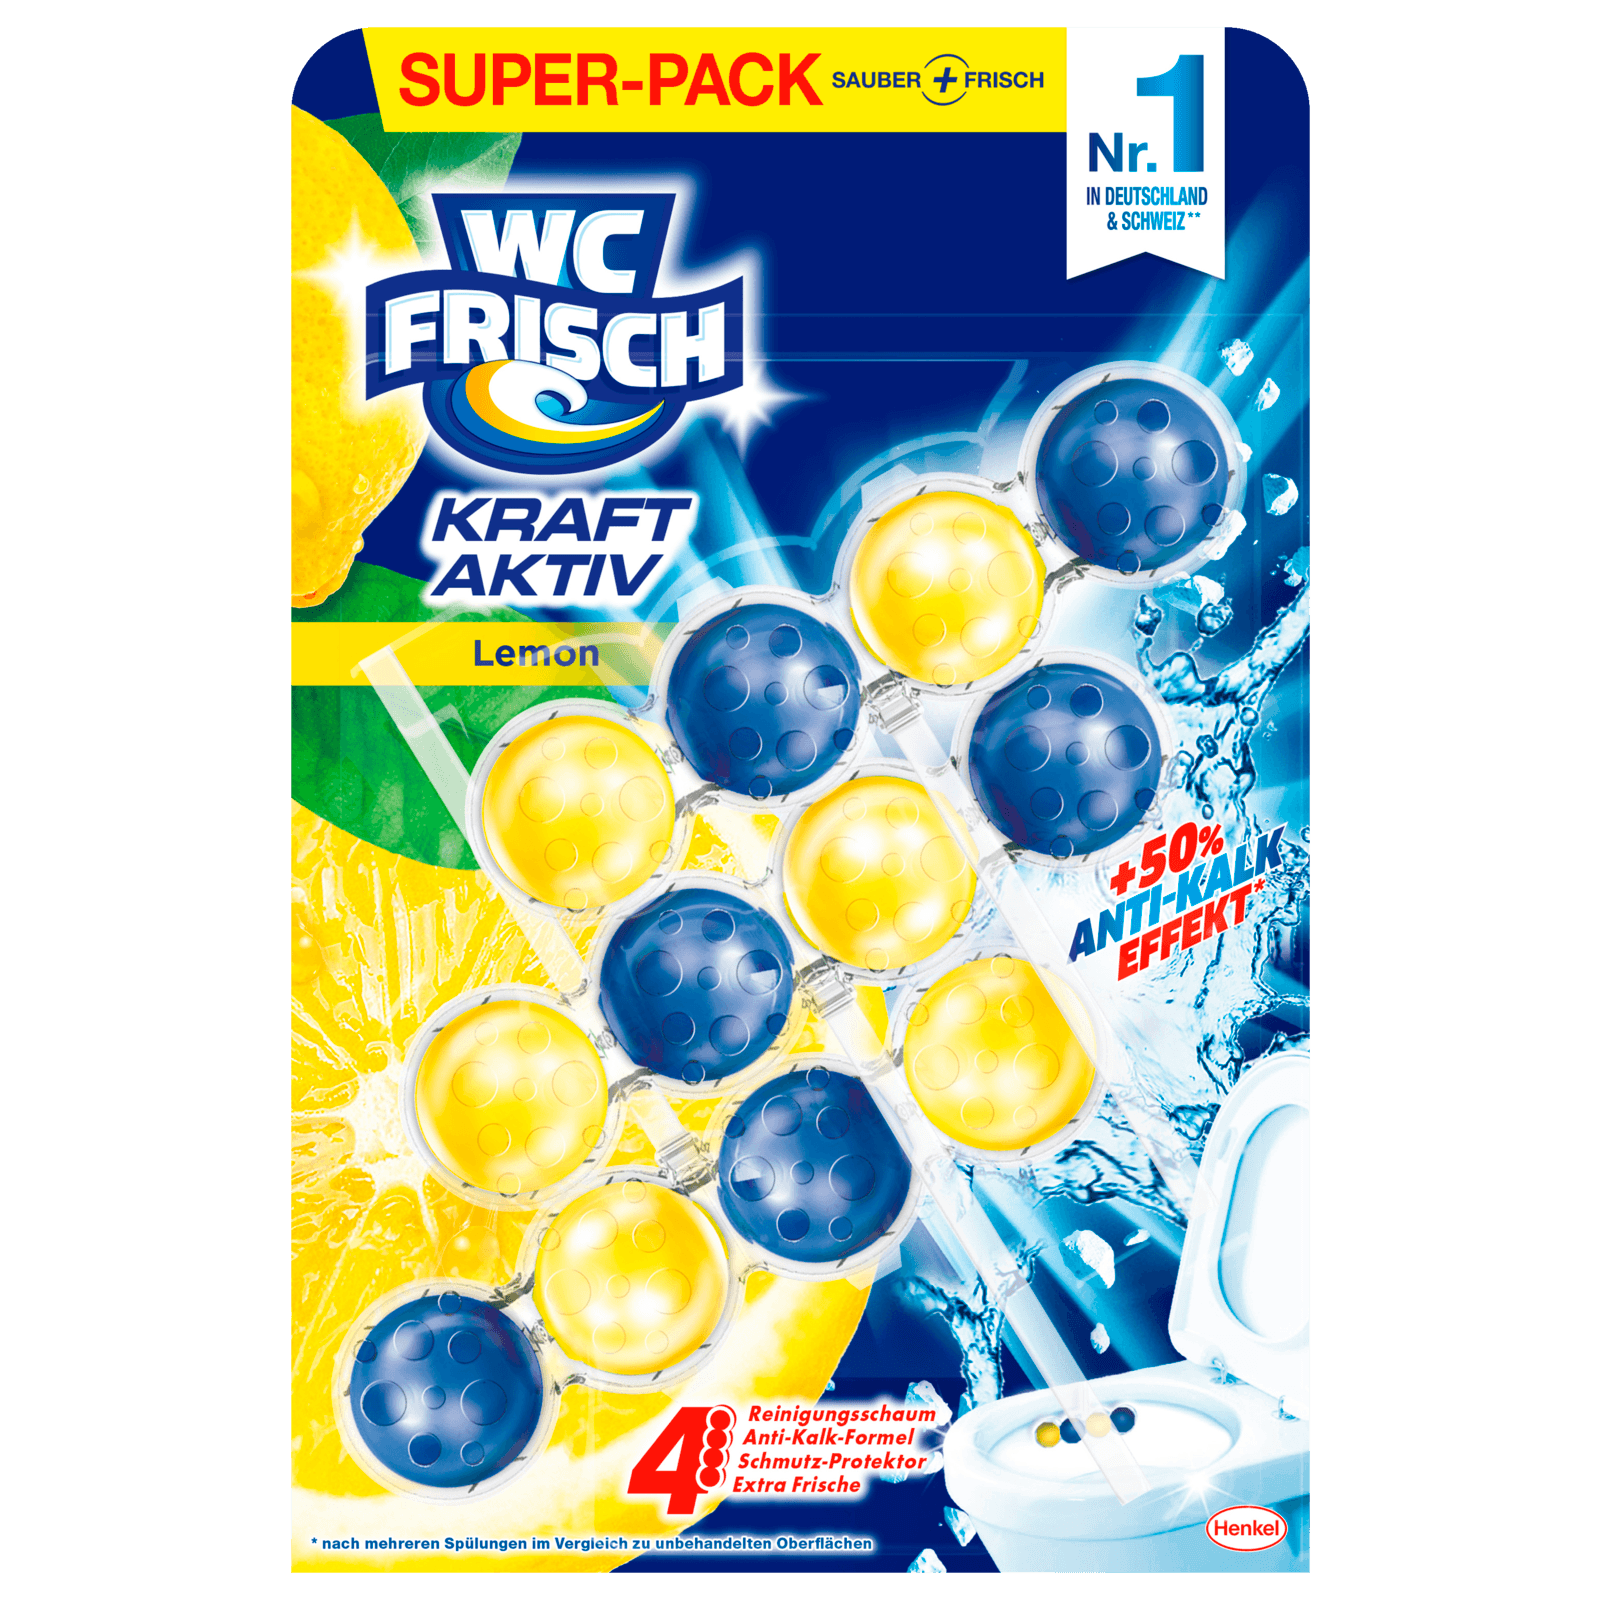 WC Frisch Kraft Aktiv Lemon bestellen! bei 150g REWE Super-Pack online